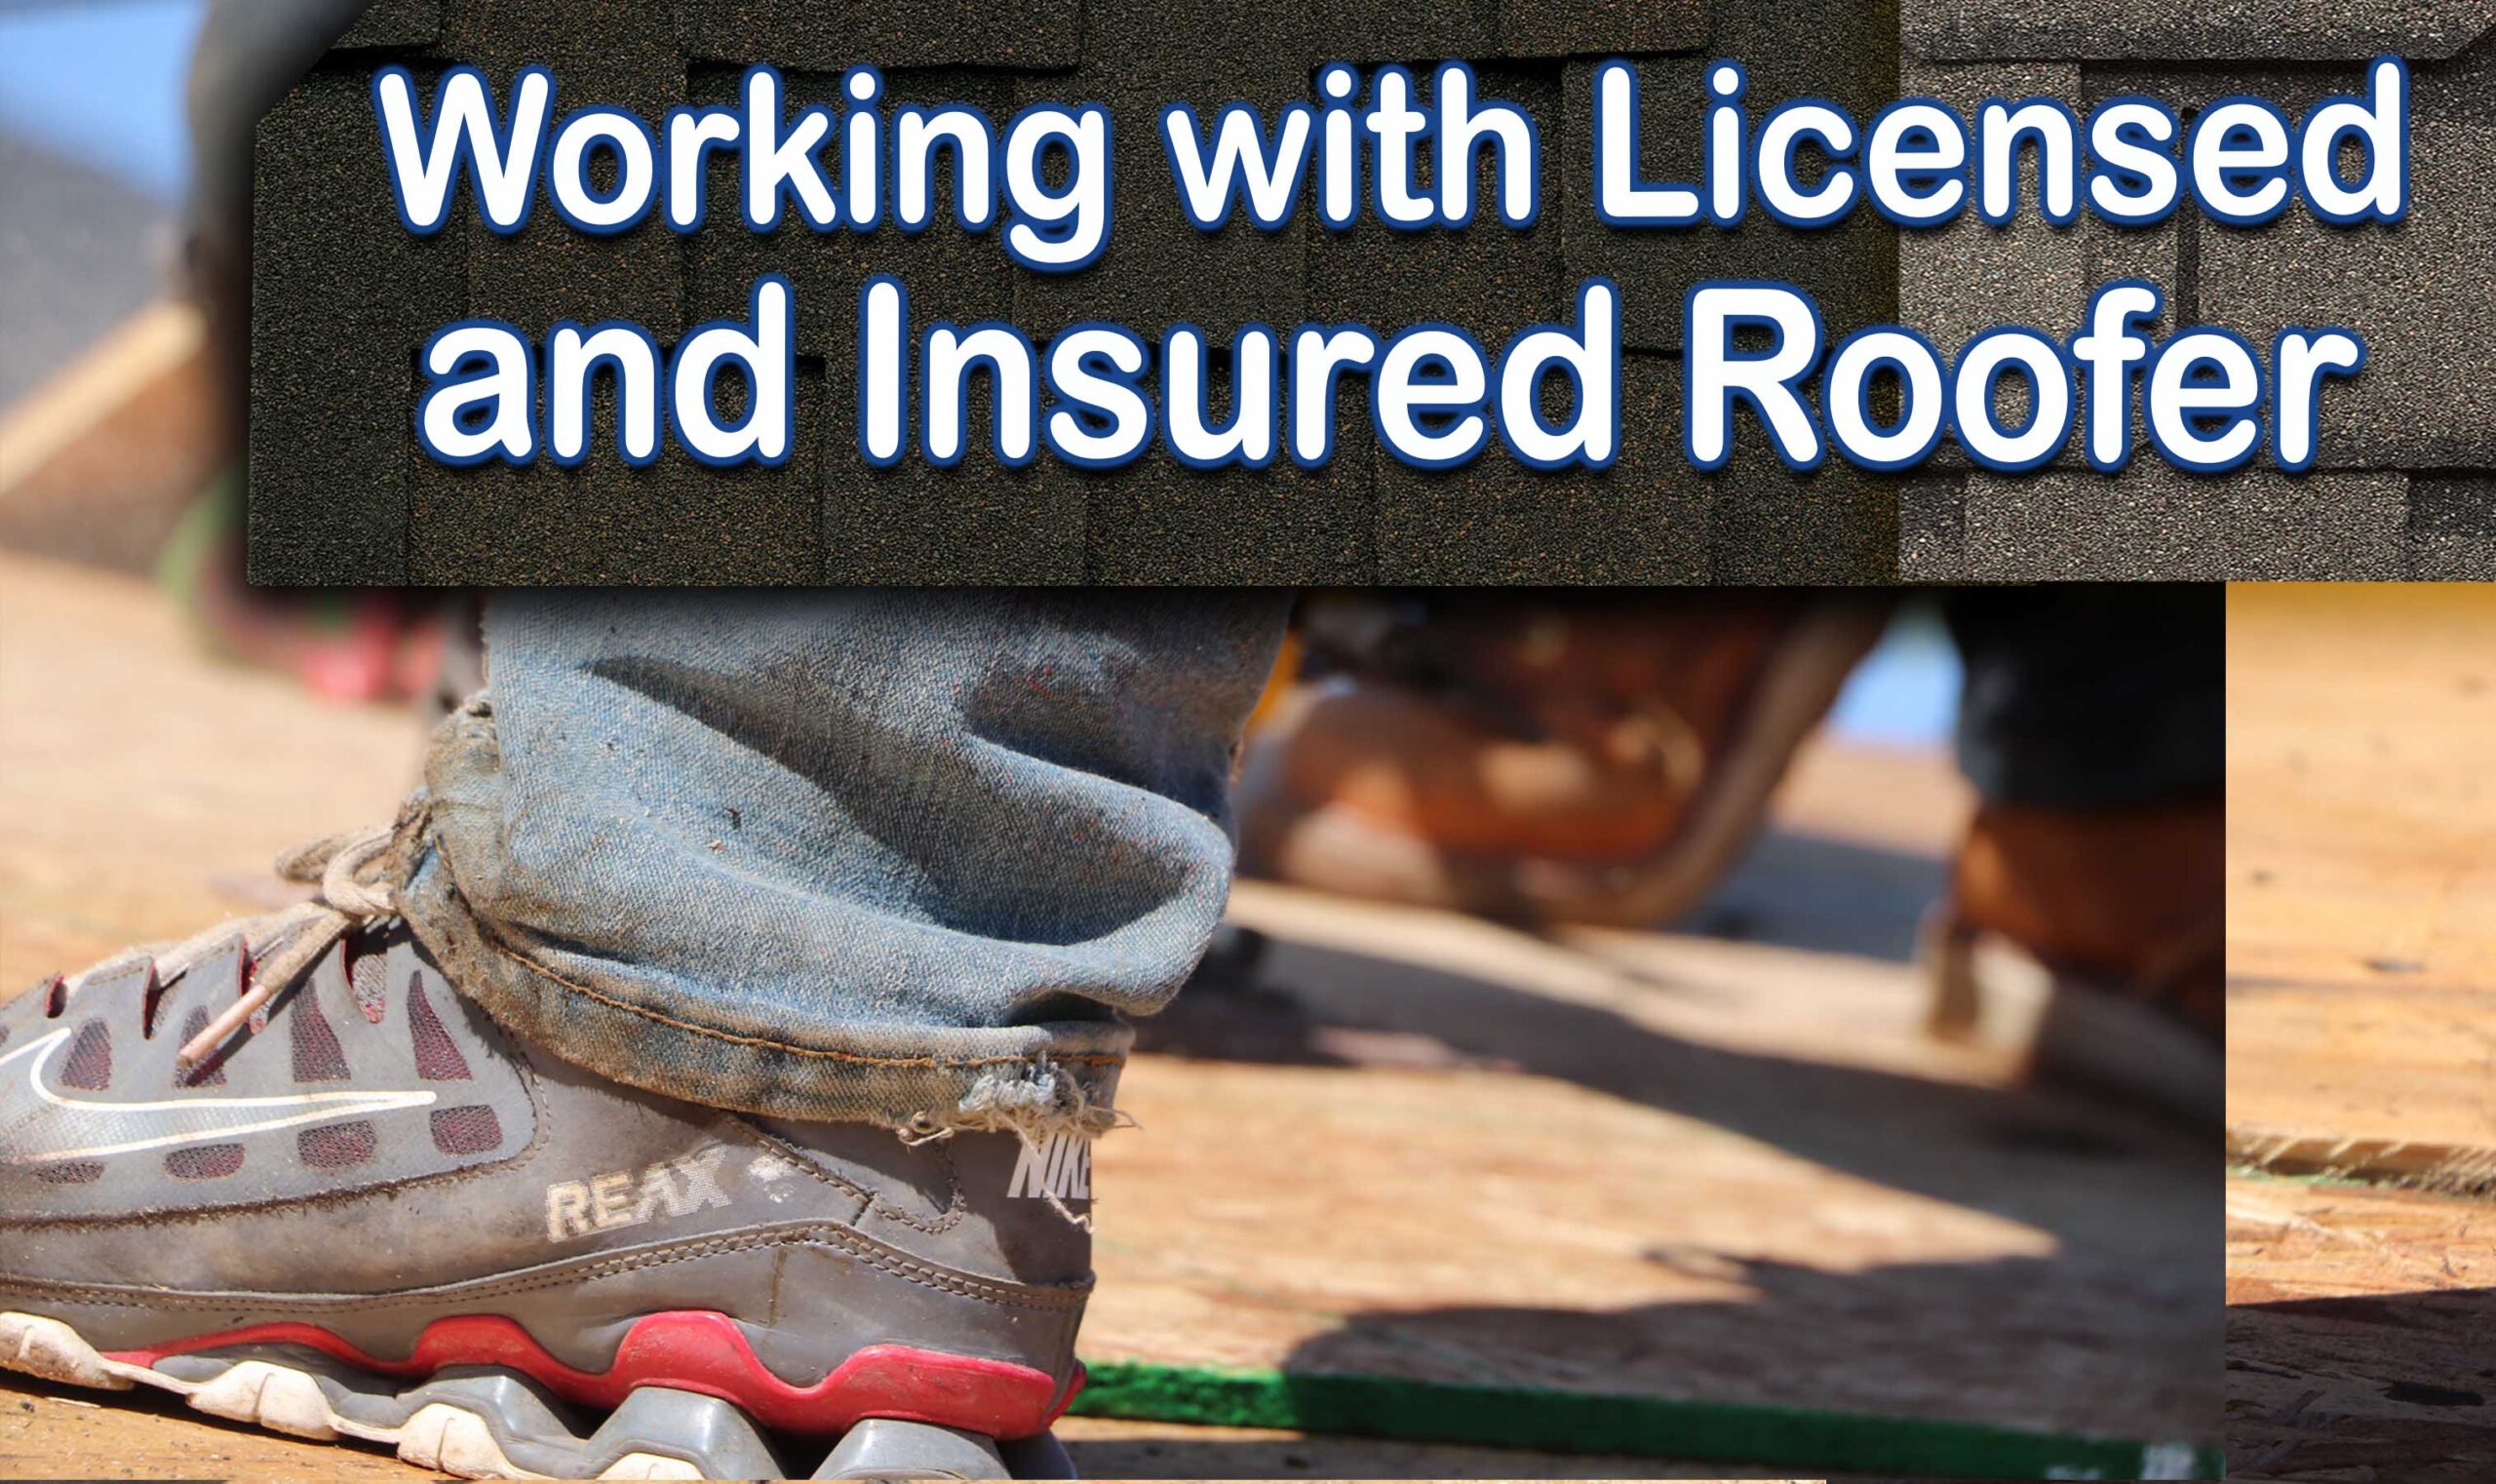 licensed and insured roofer